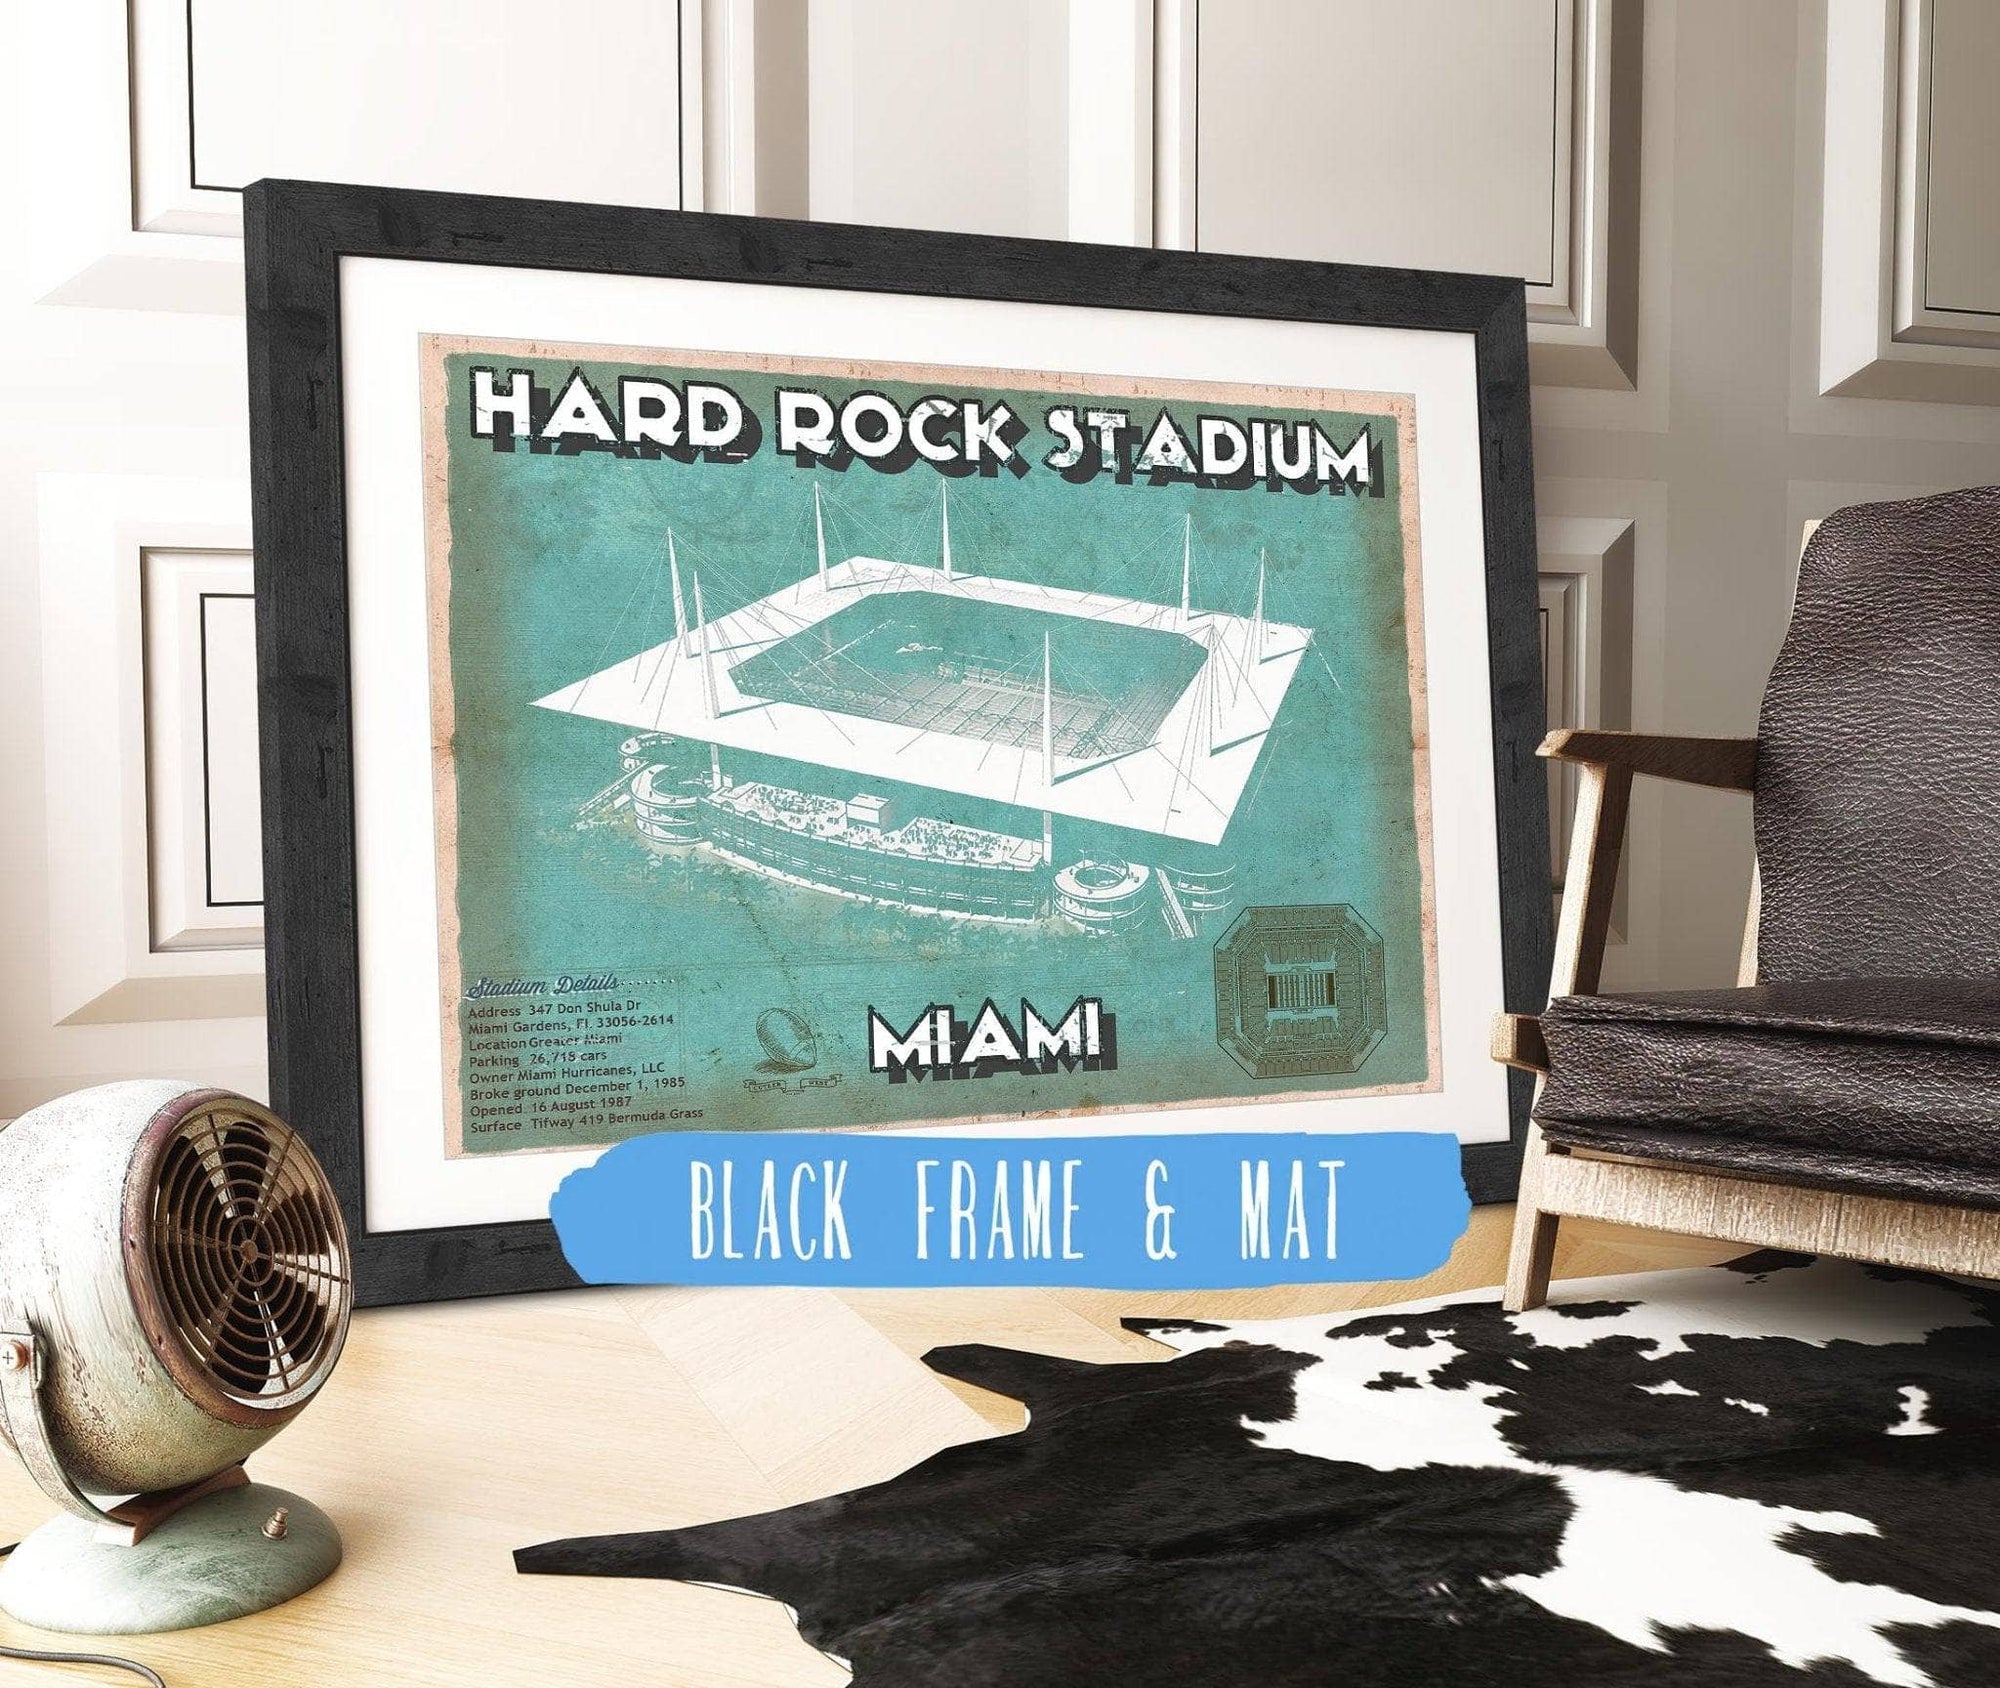 Cutler West Pro Football Collection 14" x 11" / Black Frame & Mat Miami Dolphins Hard Rock Stadium - Vintage Football Print 653977202_62730